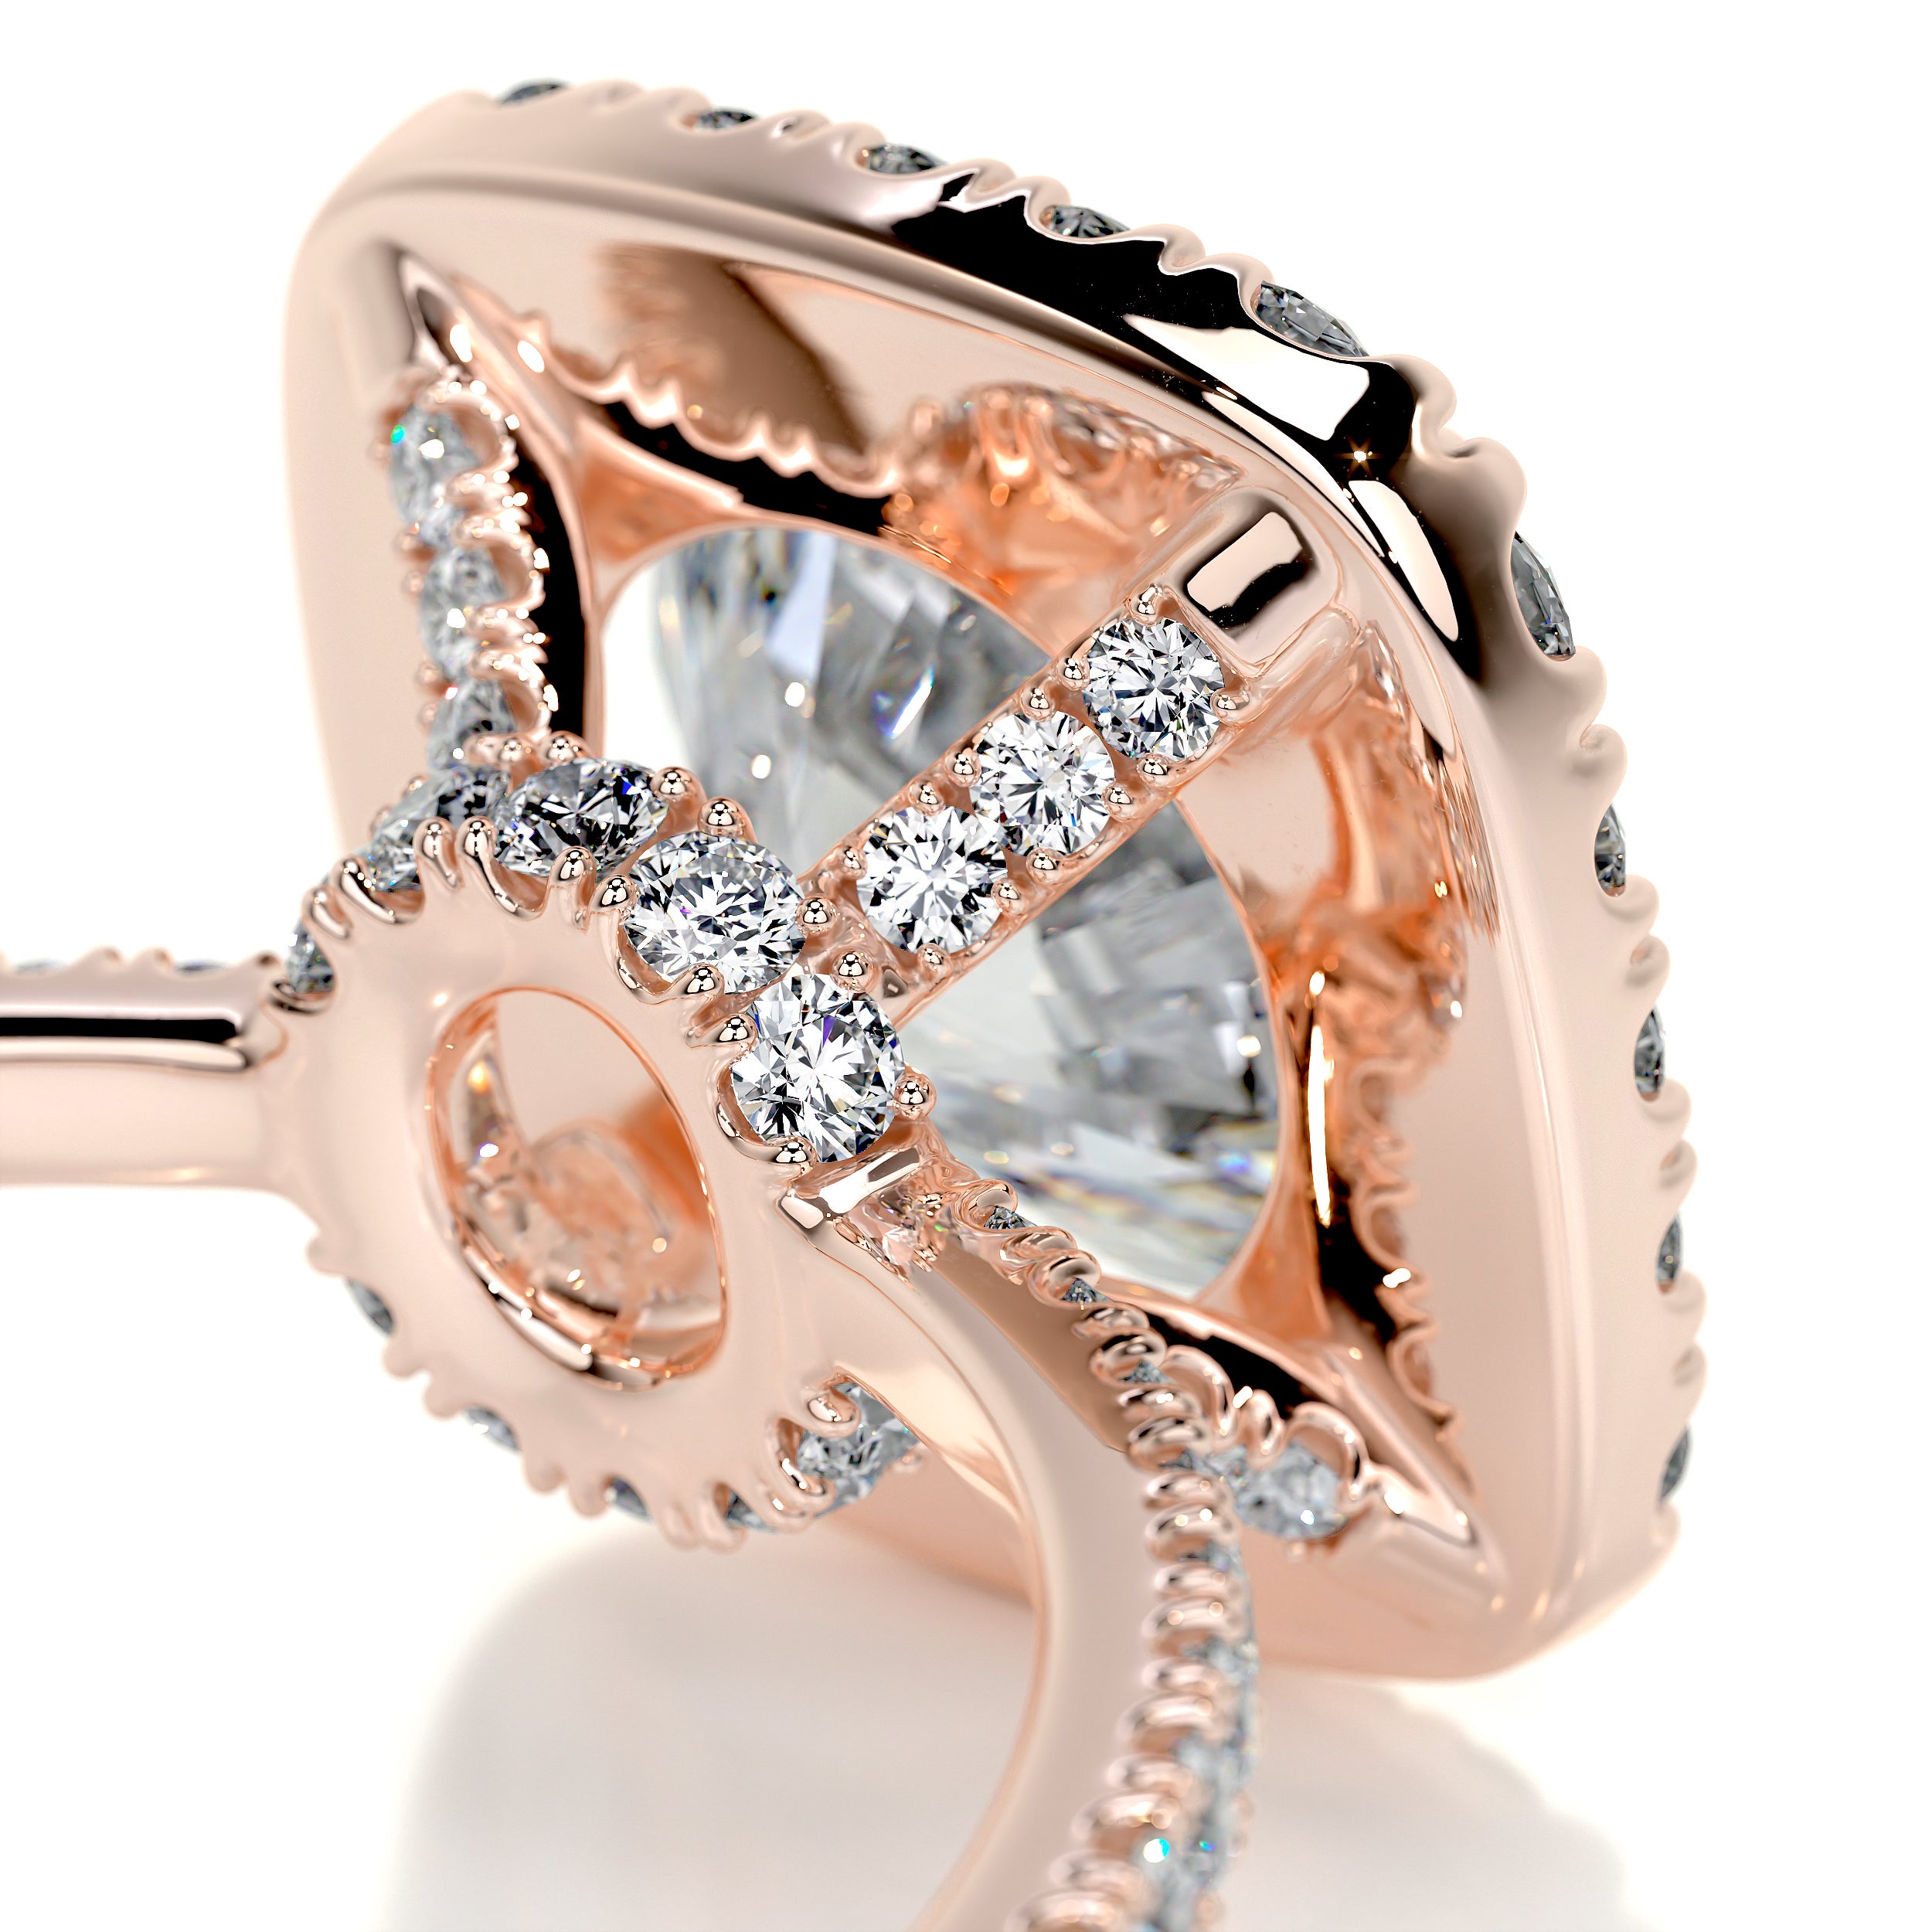 Catalina Moissanite & Diamonds Ring -14K Rose Gold